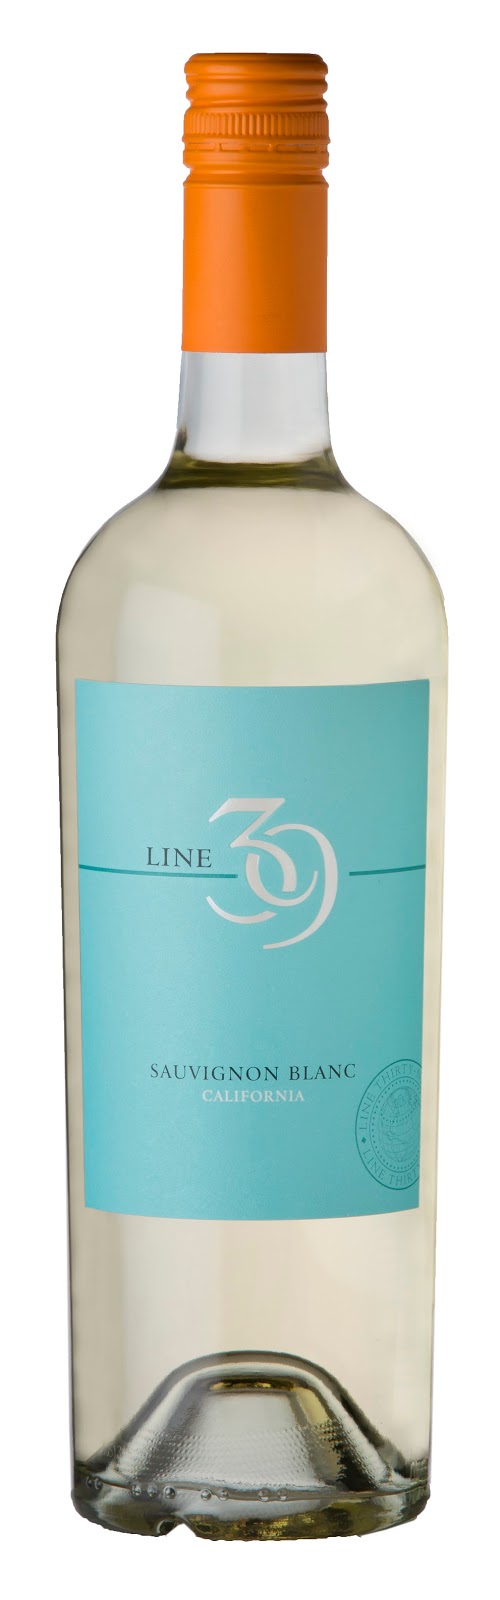 The Winey Mom Winey Tasting Notes Line 39 Sauvignon Blanc